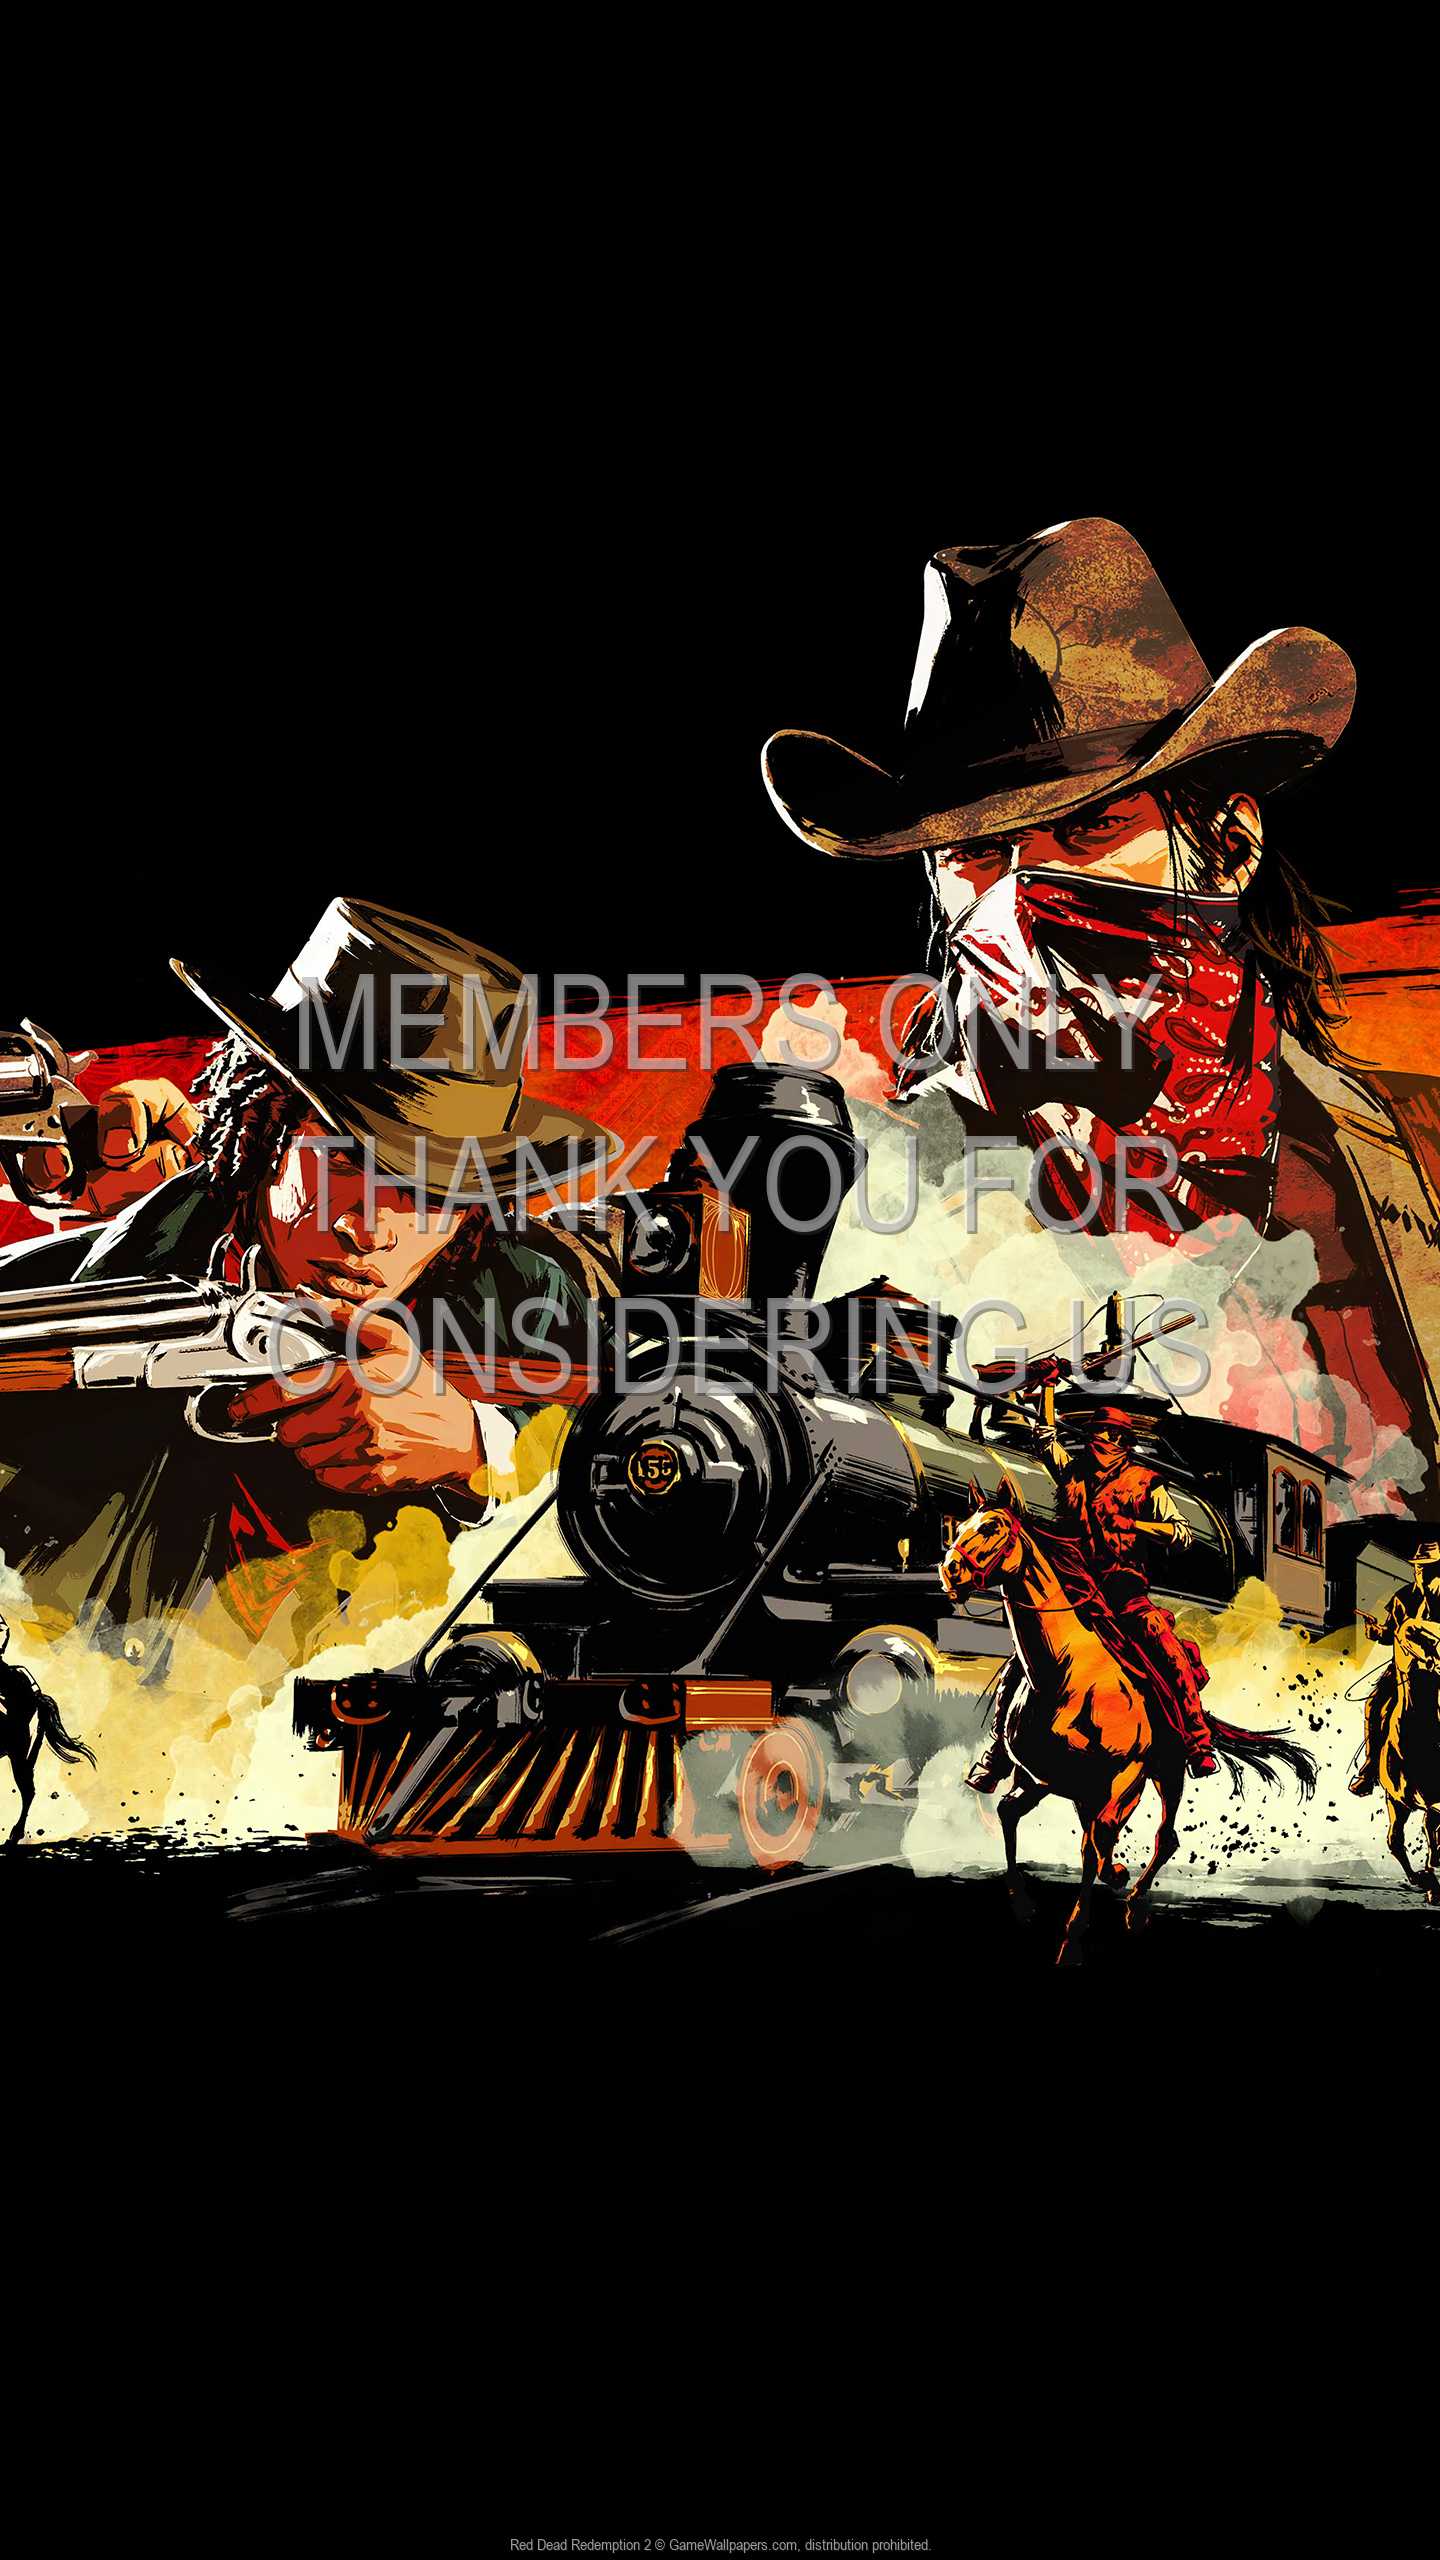 Red Dead Redemption 2 1440p Vertical Mobile wallpaper or background 08